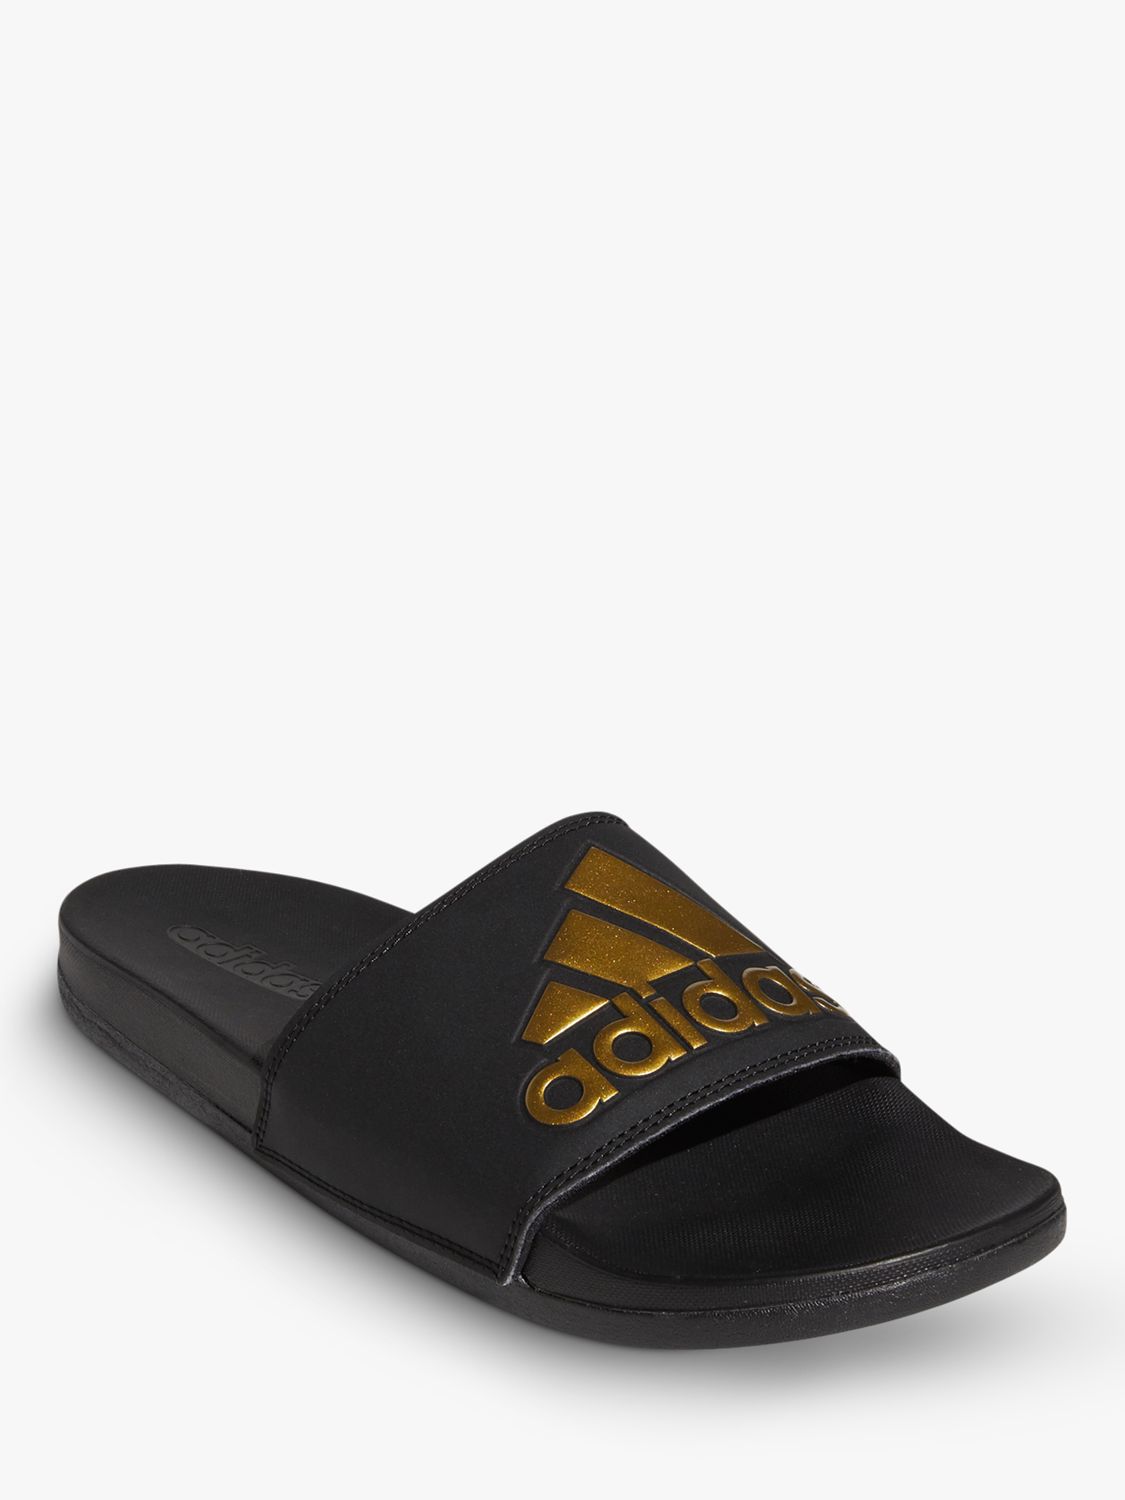 adidas black gold slides